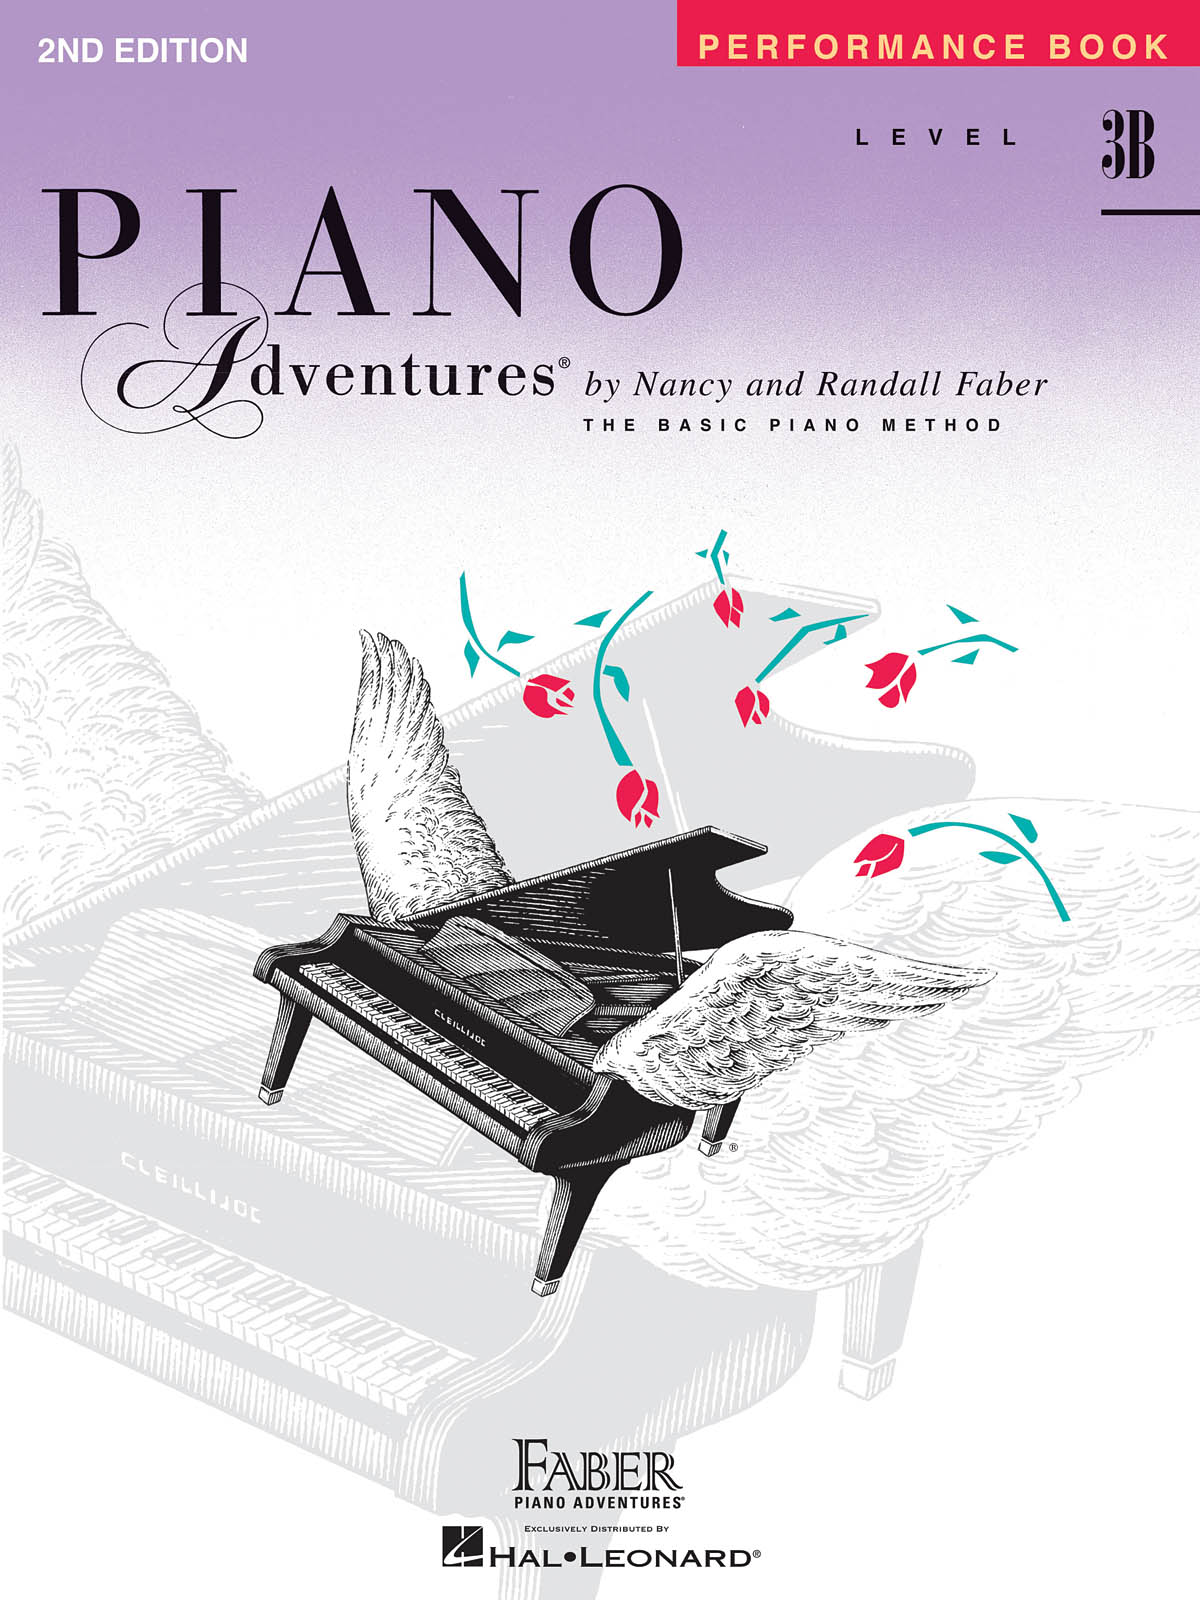 Piano Adventures Level 3B - Peformance Book - 2nd Edition - škola hry na klavír